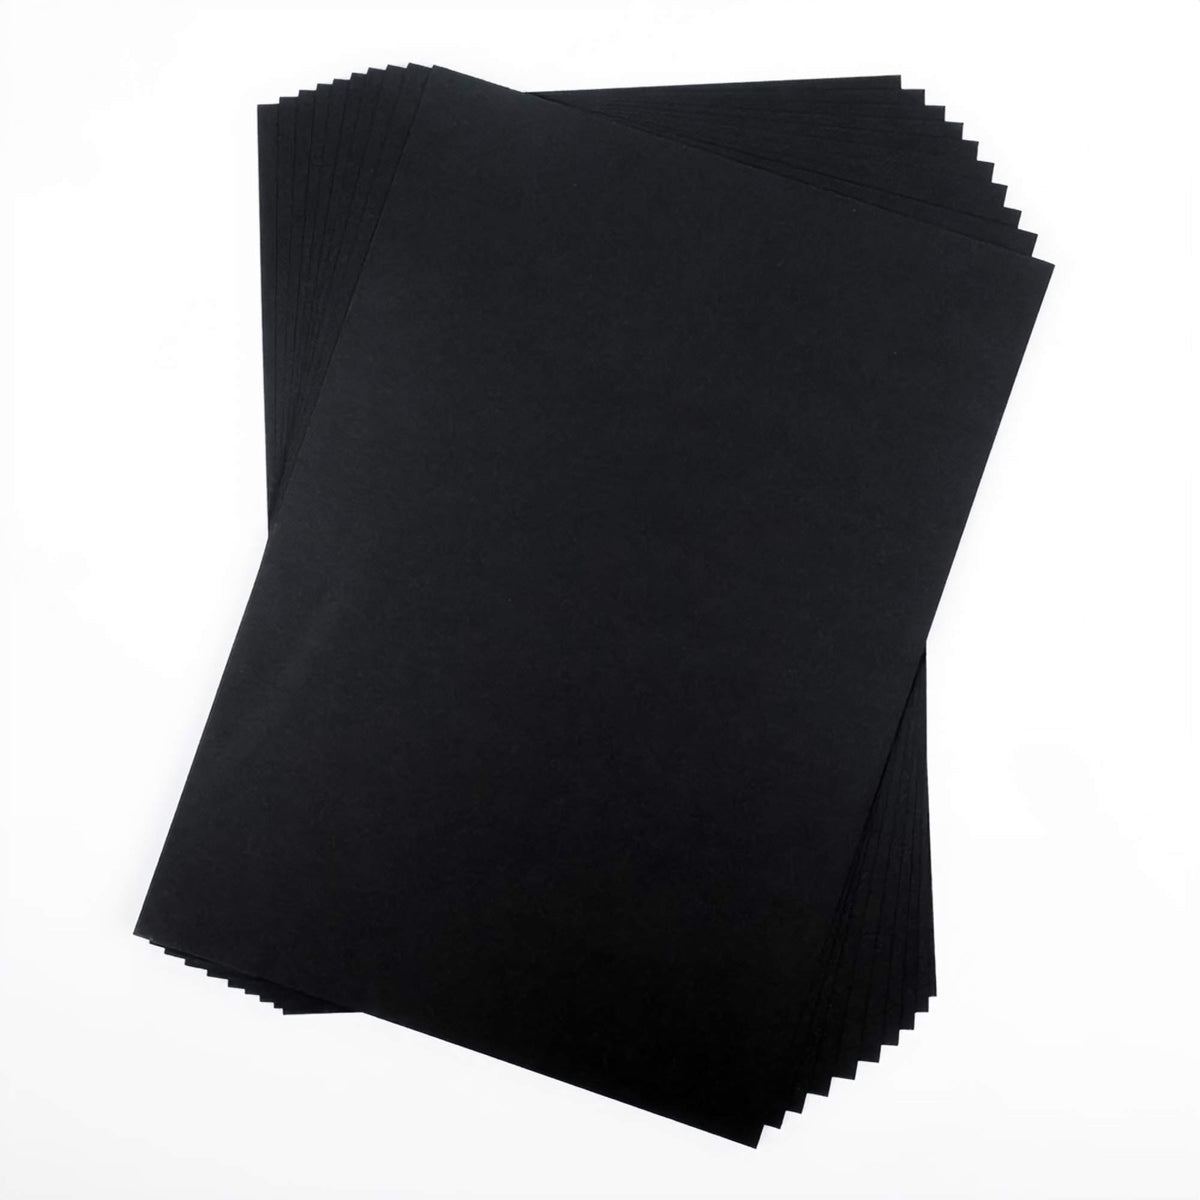 Seawhite Recycled Black Card 300gsm - 50 Sheet Packs